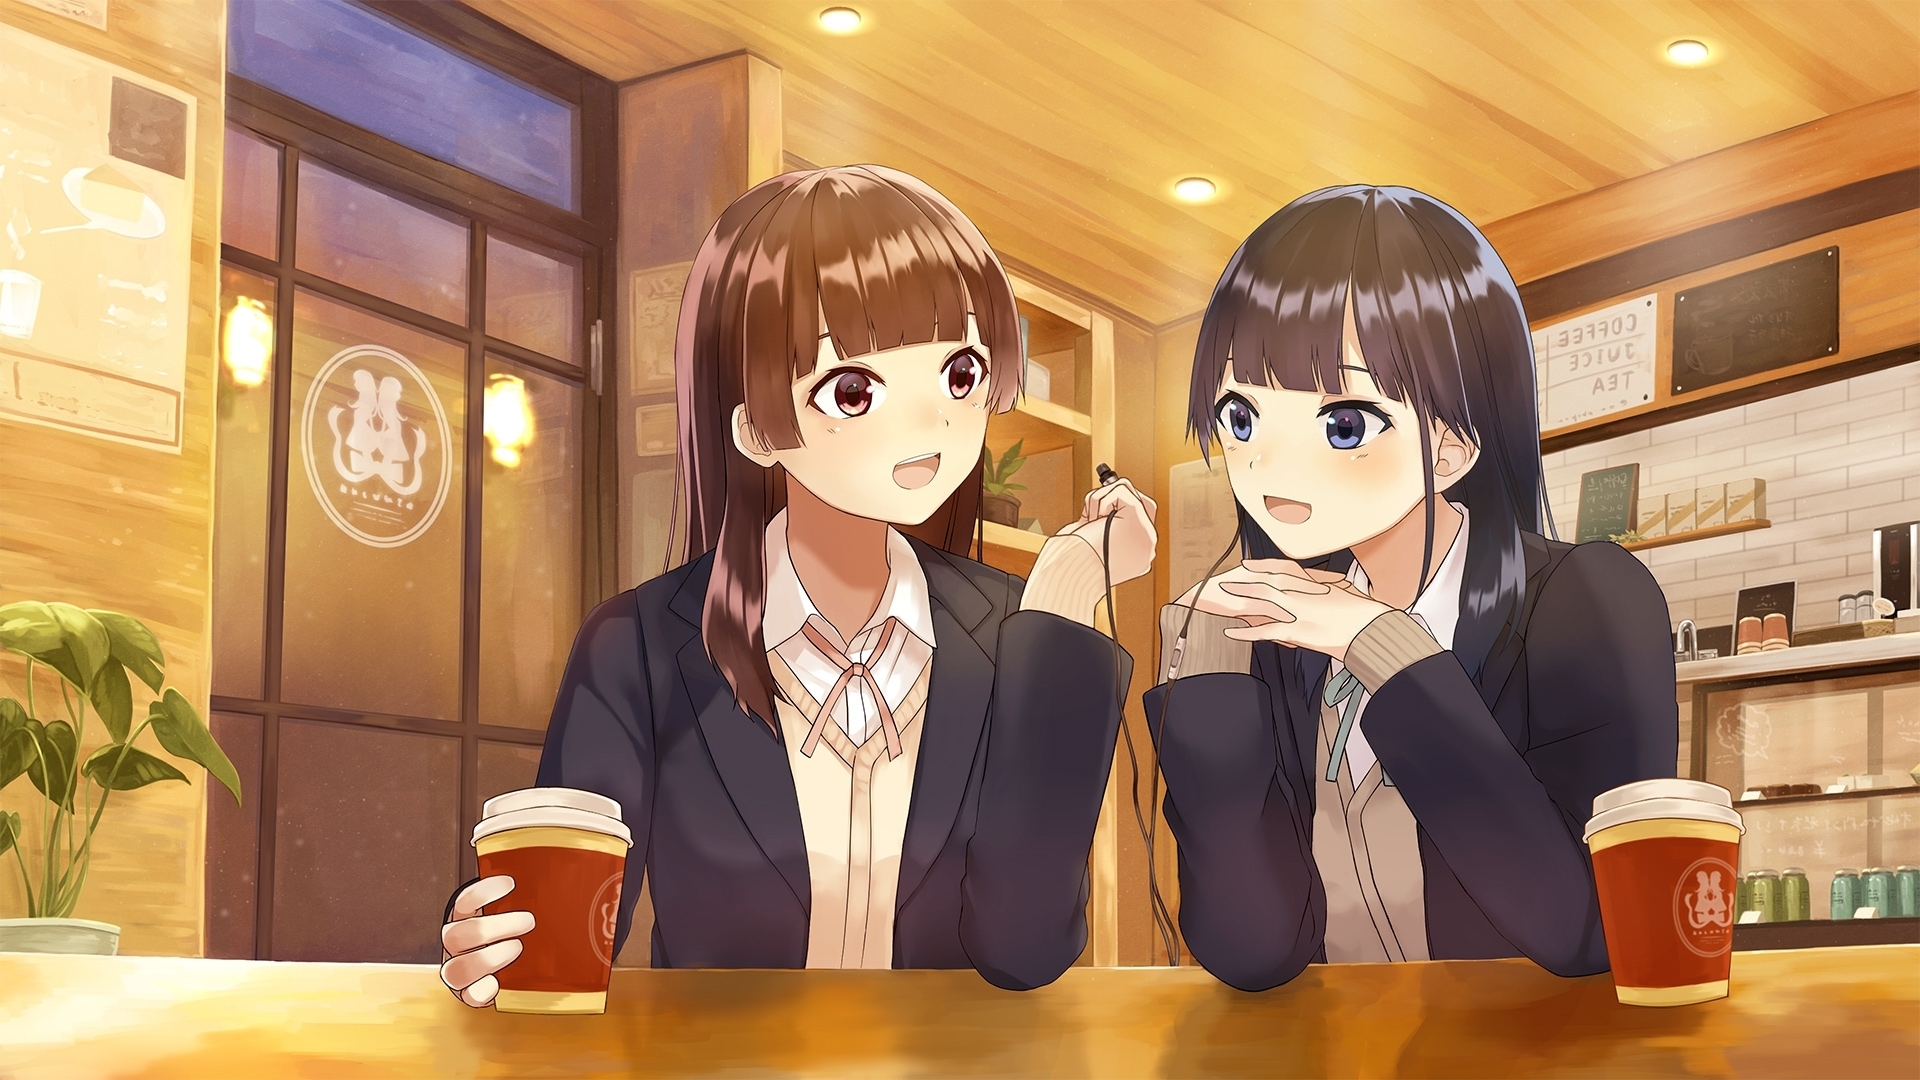 Wallpaper Anime Girls, Cafe, Drinks, Coffee, Friends:1920x1080